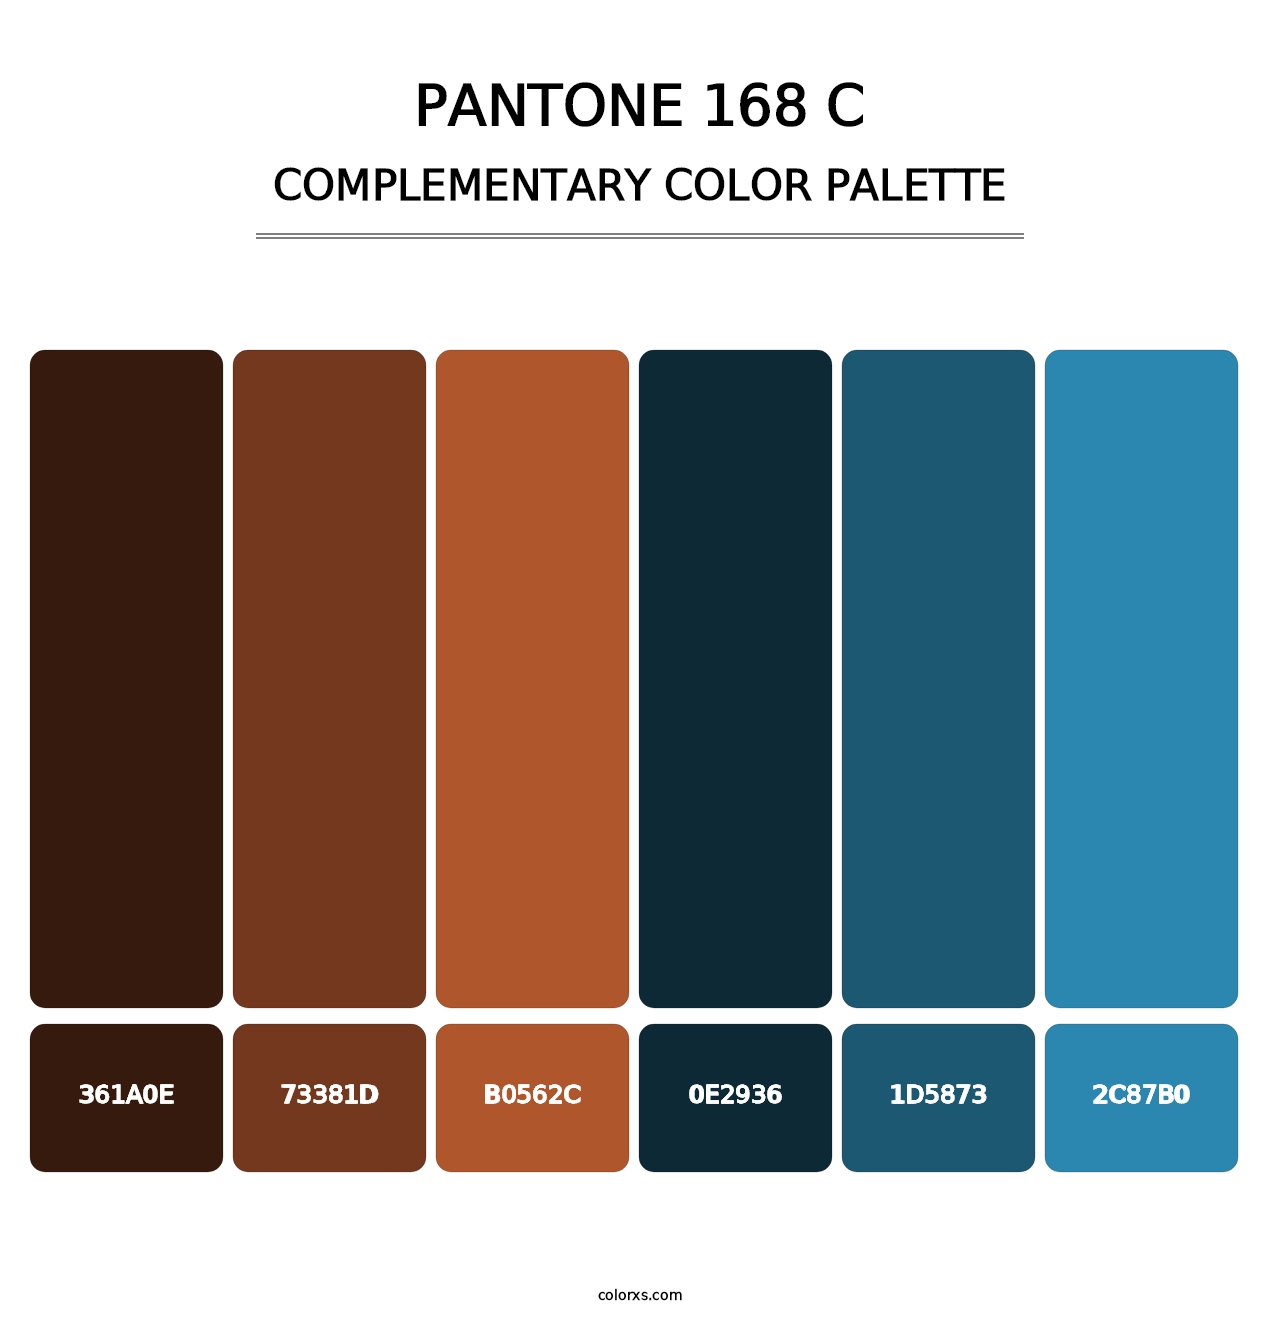 PANTONE 168 C - Complementary Color Palette